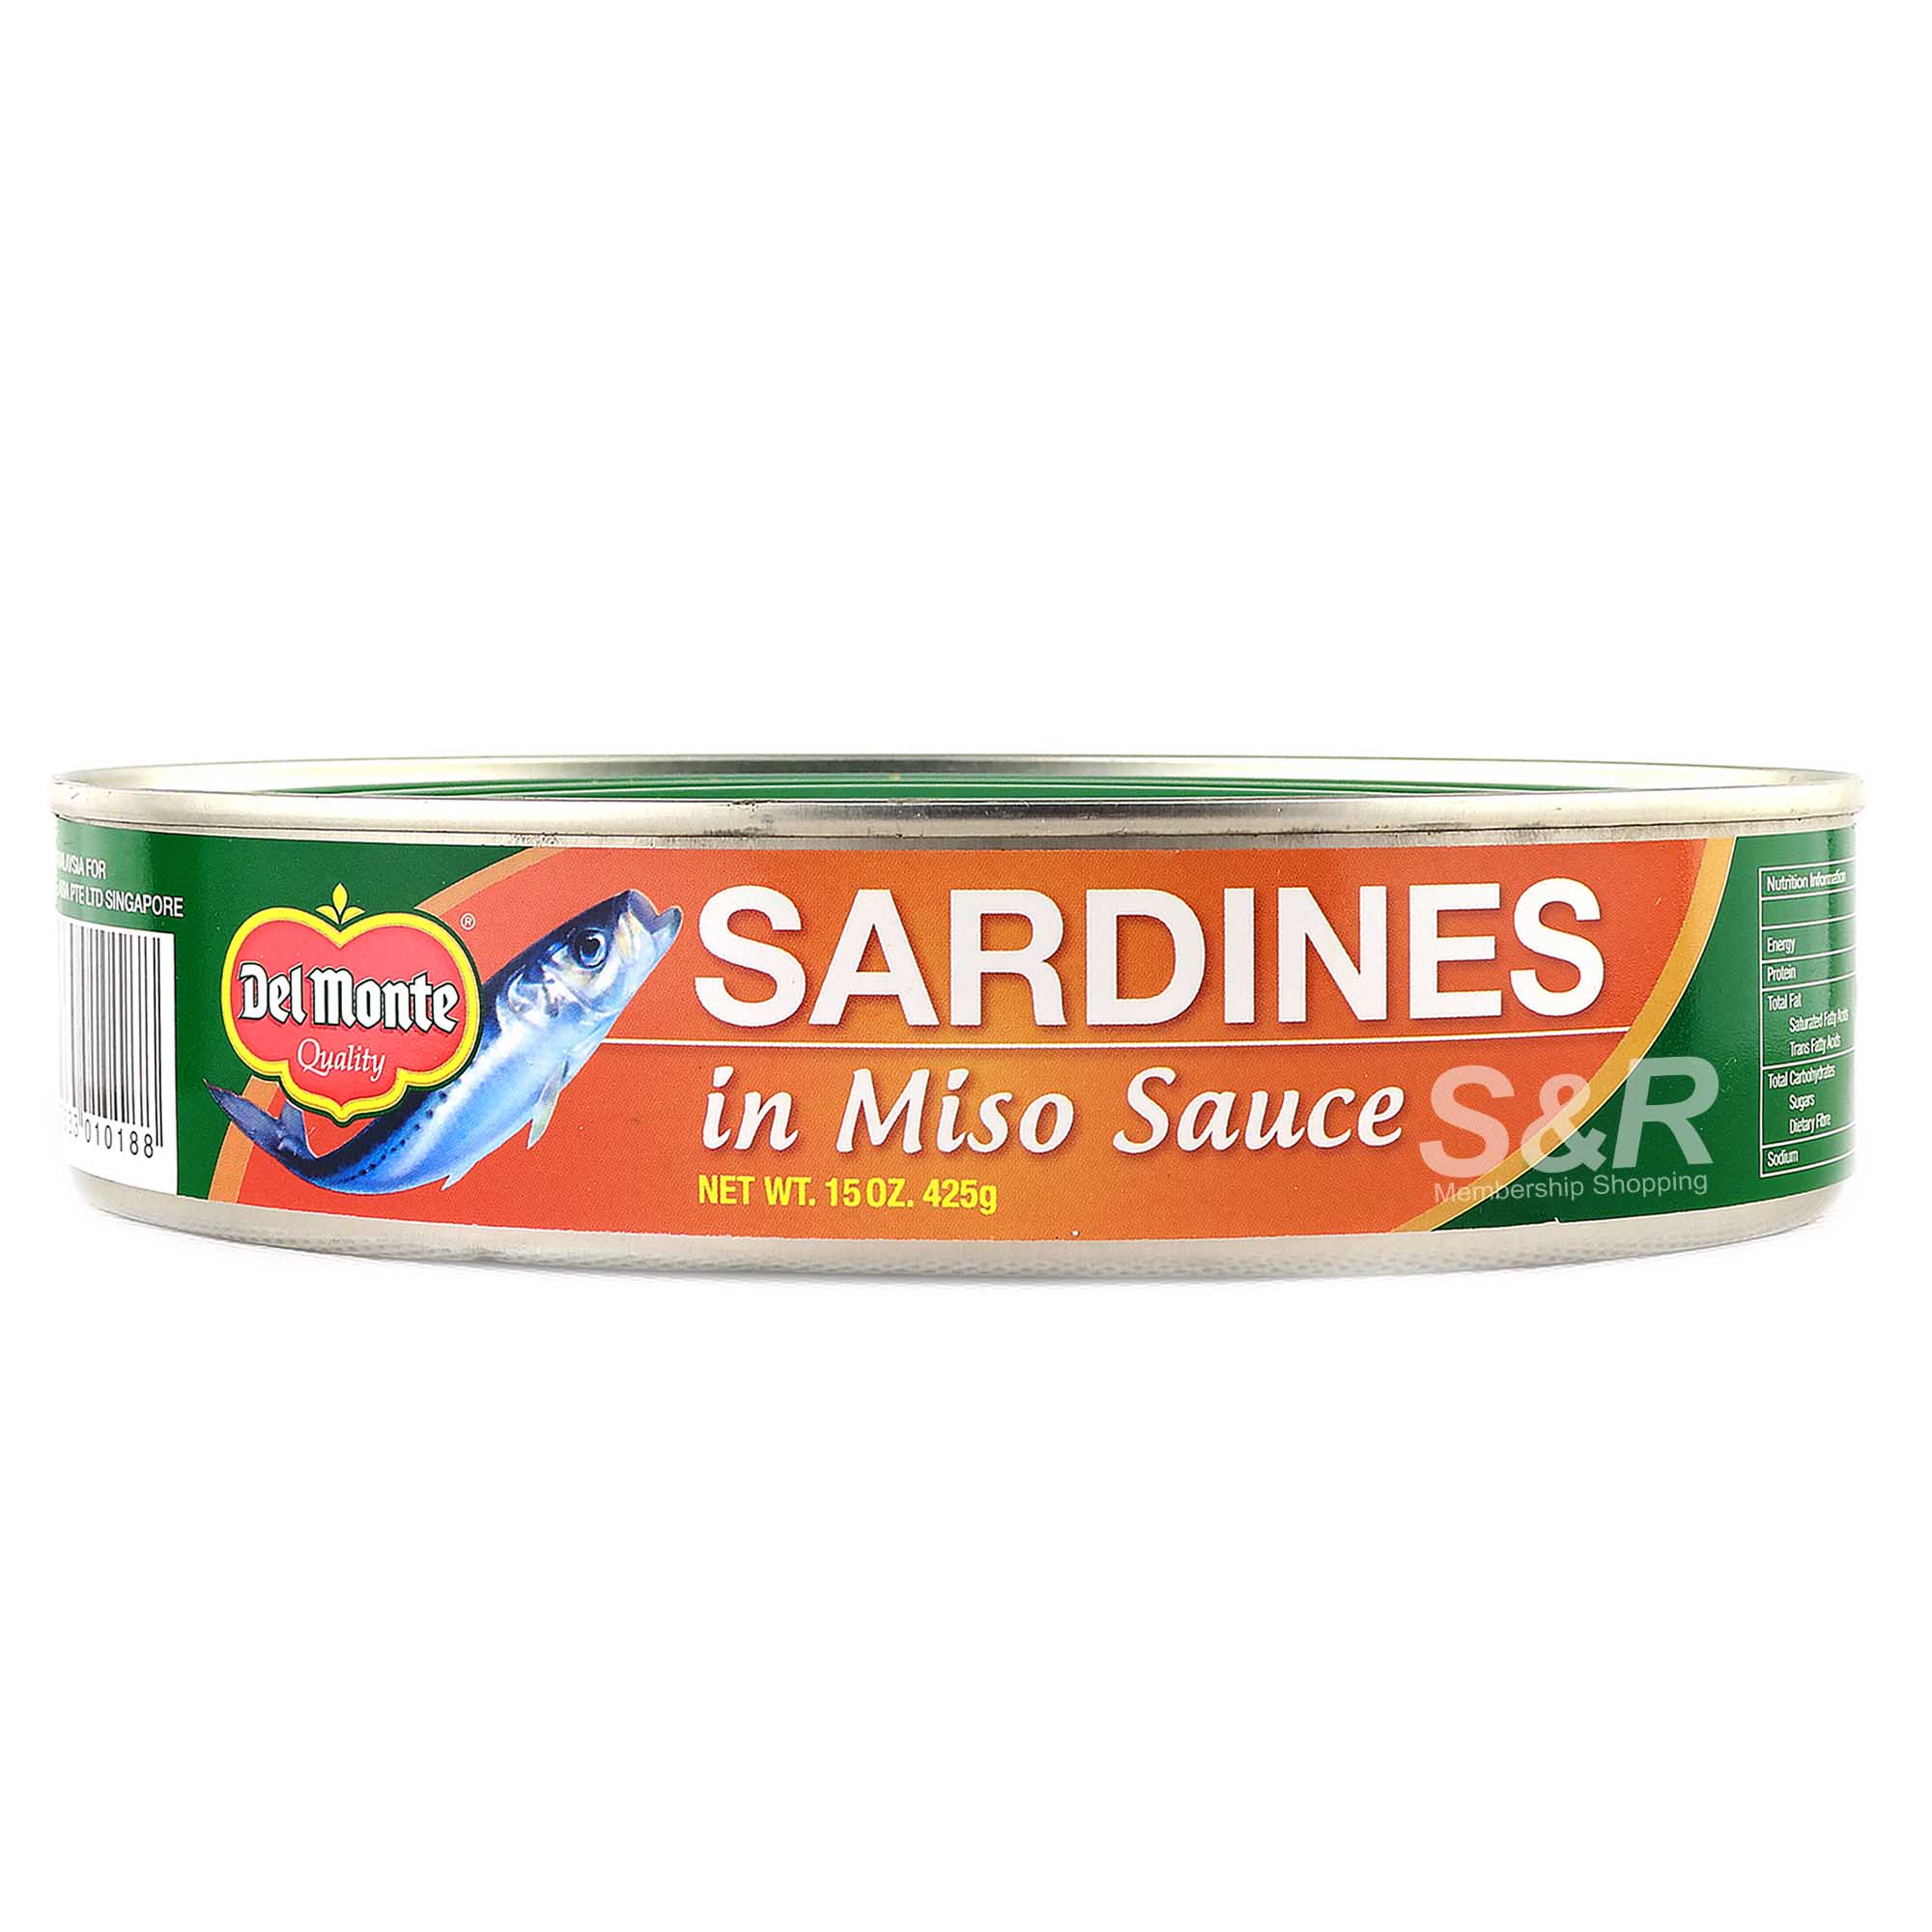 Del Monte Sardines in Miso Sauce 425g